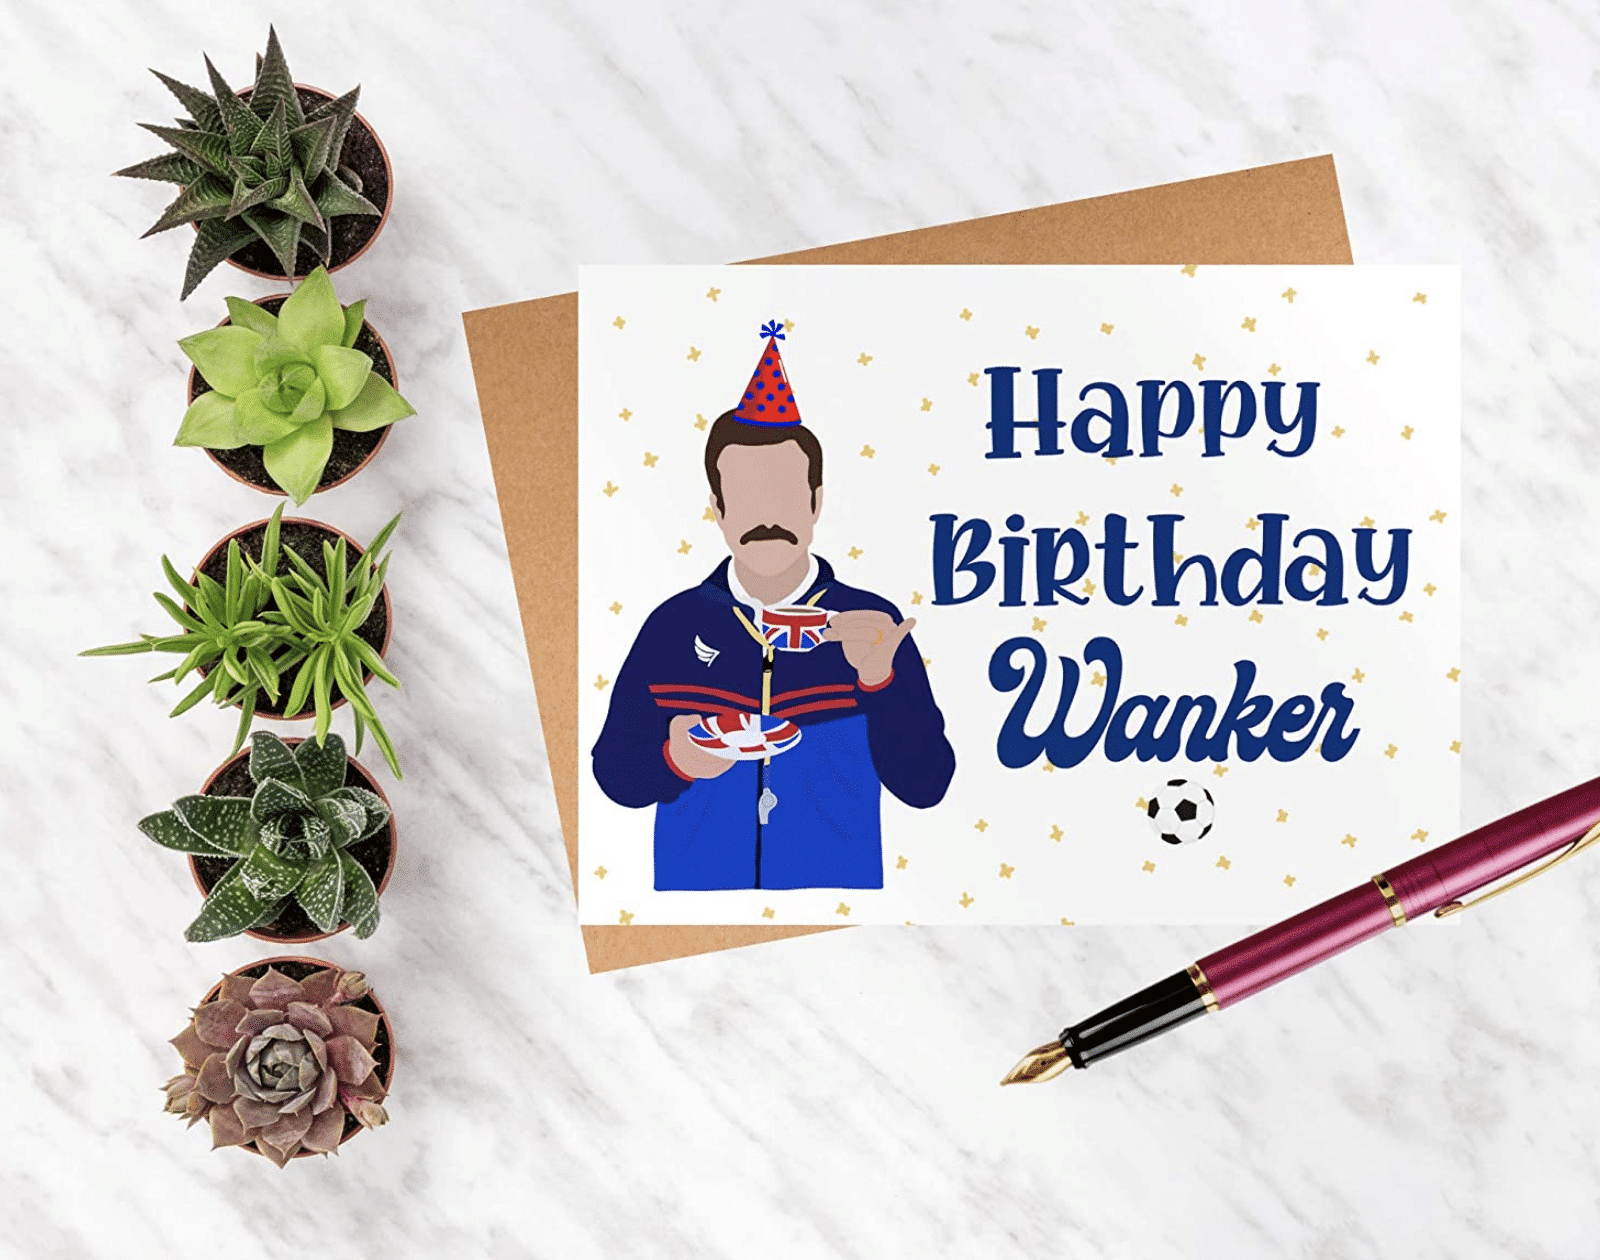 Ted Lasso Happy Birthday Wanker card